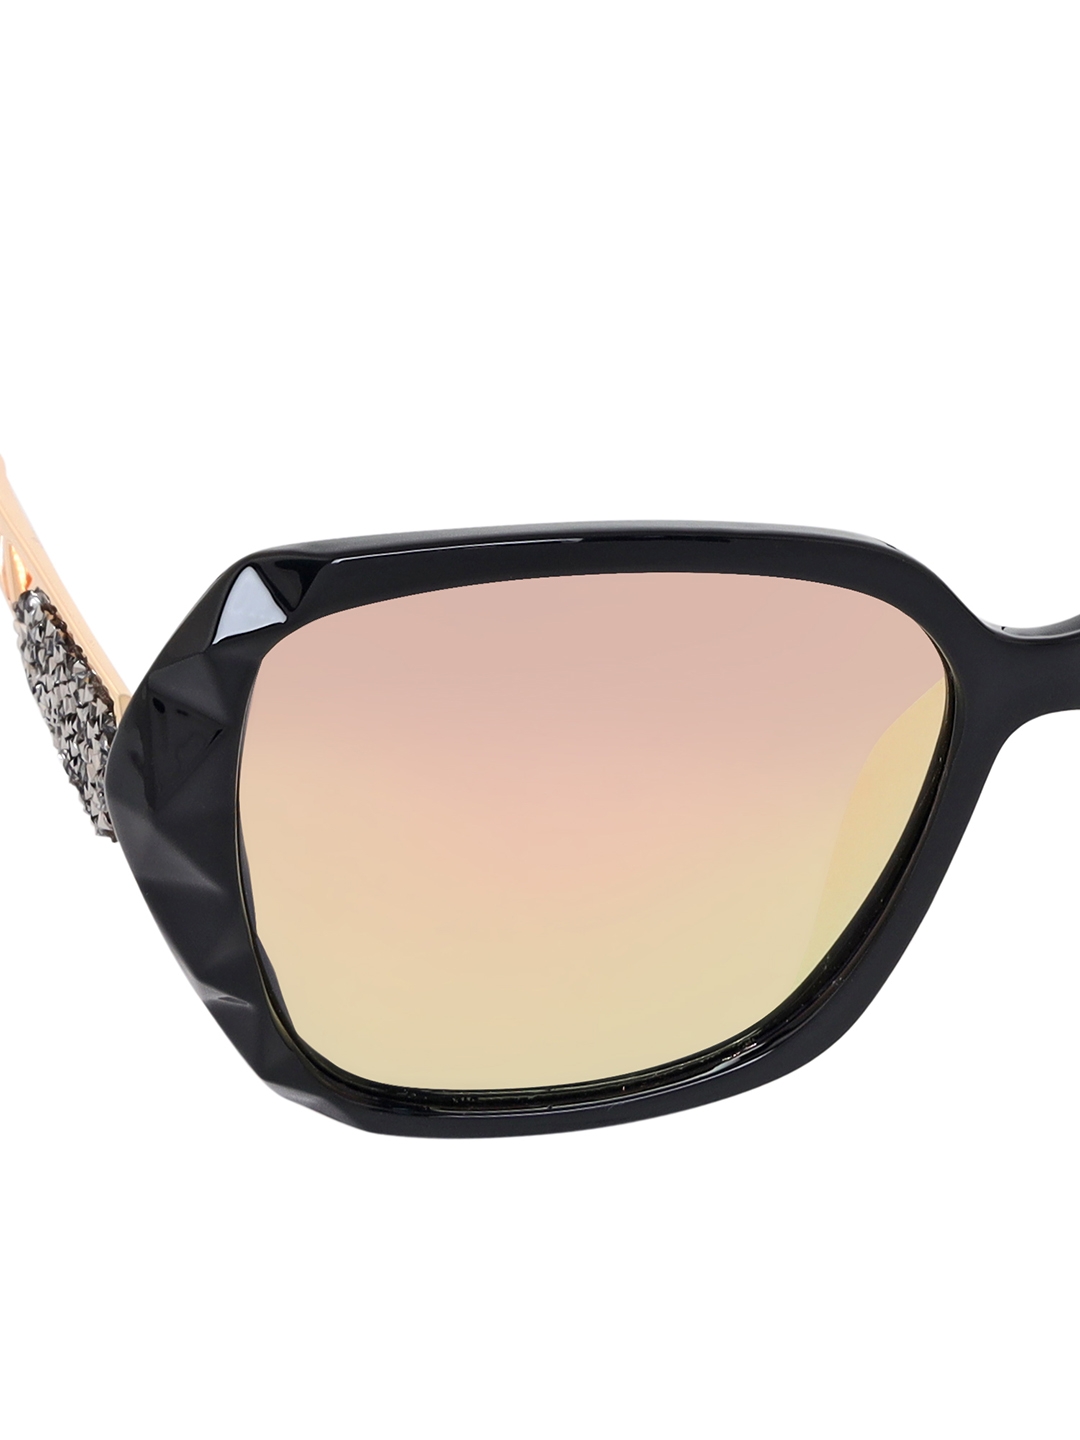 Aeropostale | Aeropostale AERO_SUN_2538_C5 Summer Sun Glasses with UV protection Polarized Anti Glare Summer Style Golden Reflective Lenses with Black wide Acrylic Frame 3